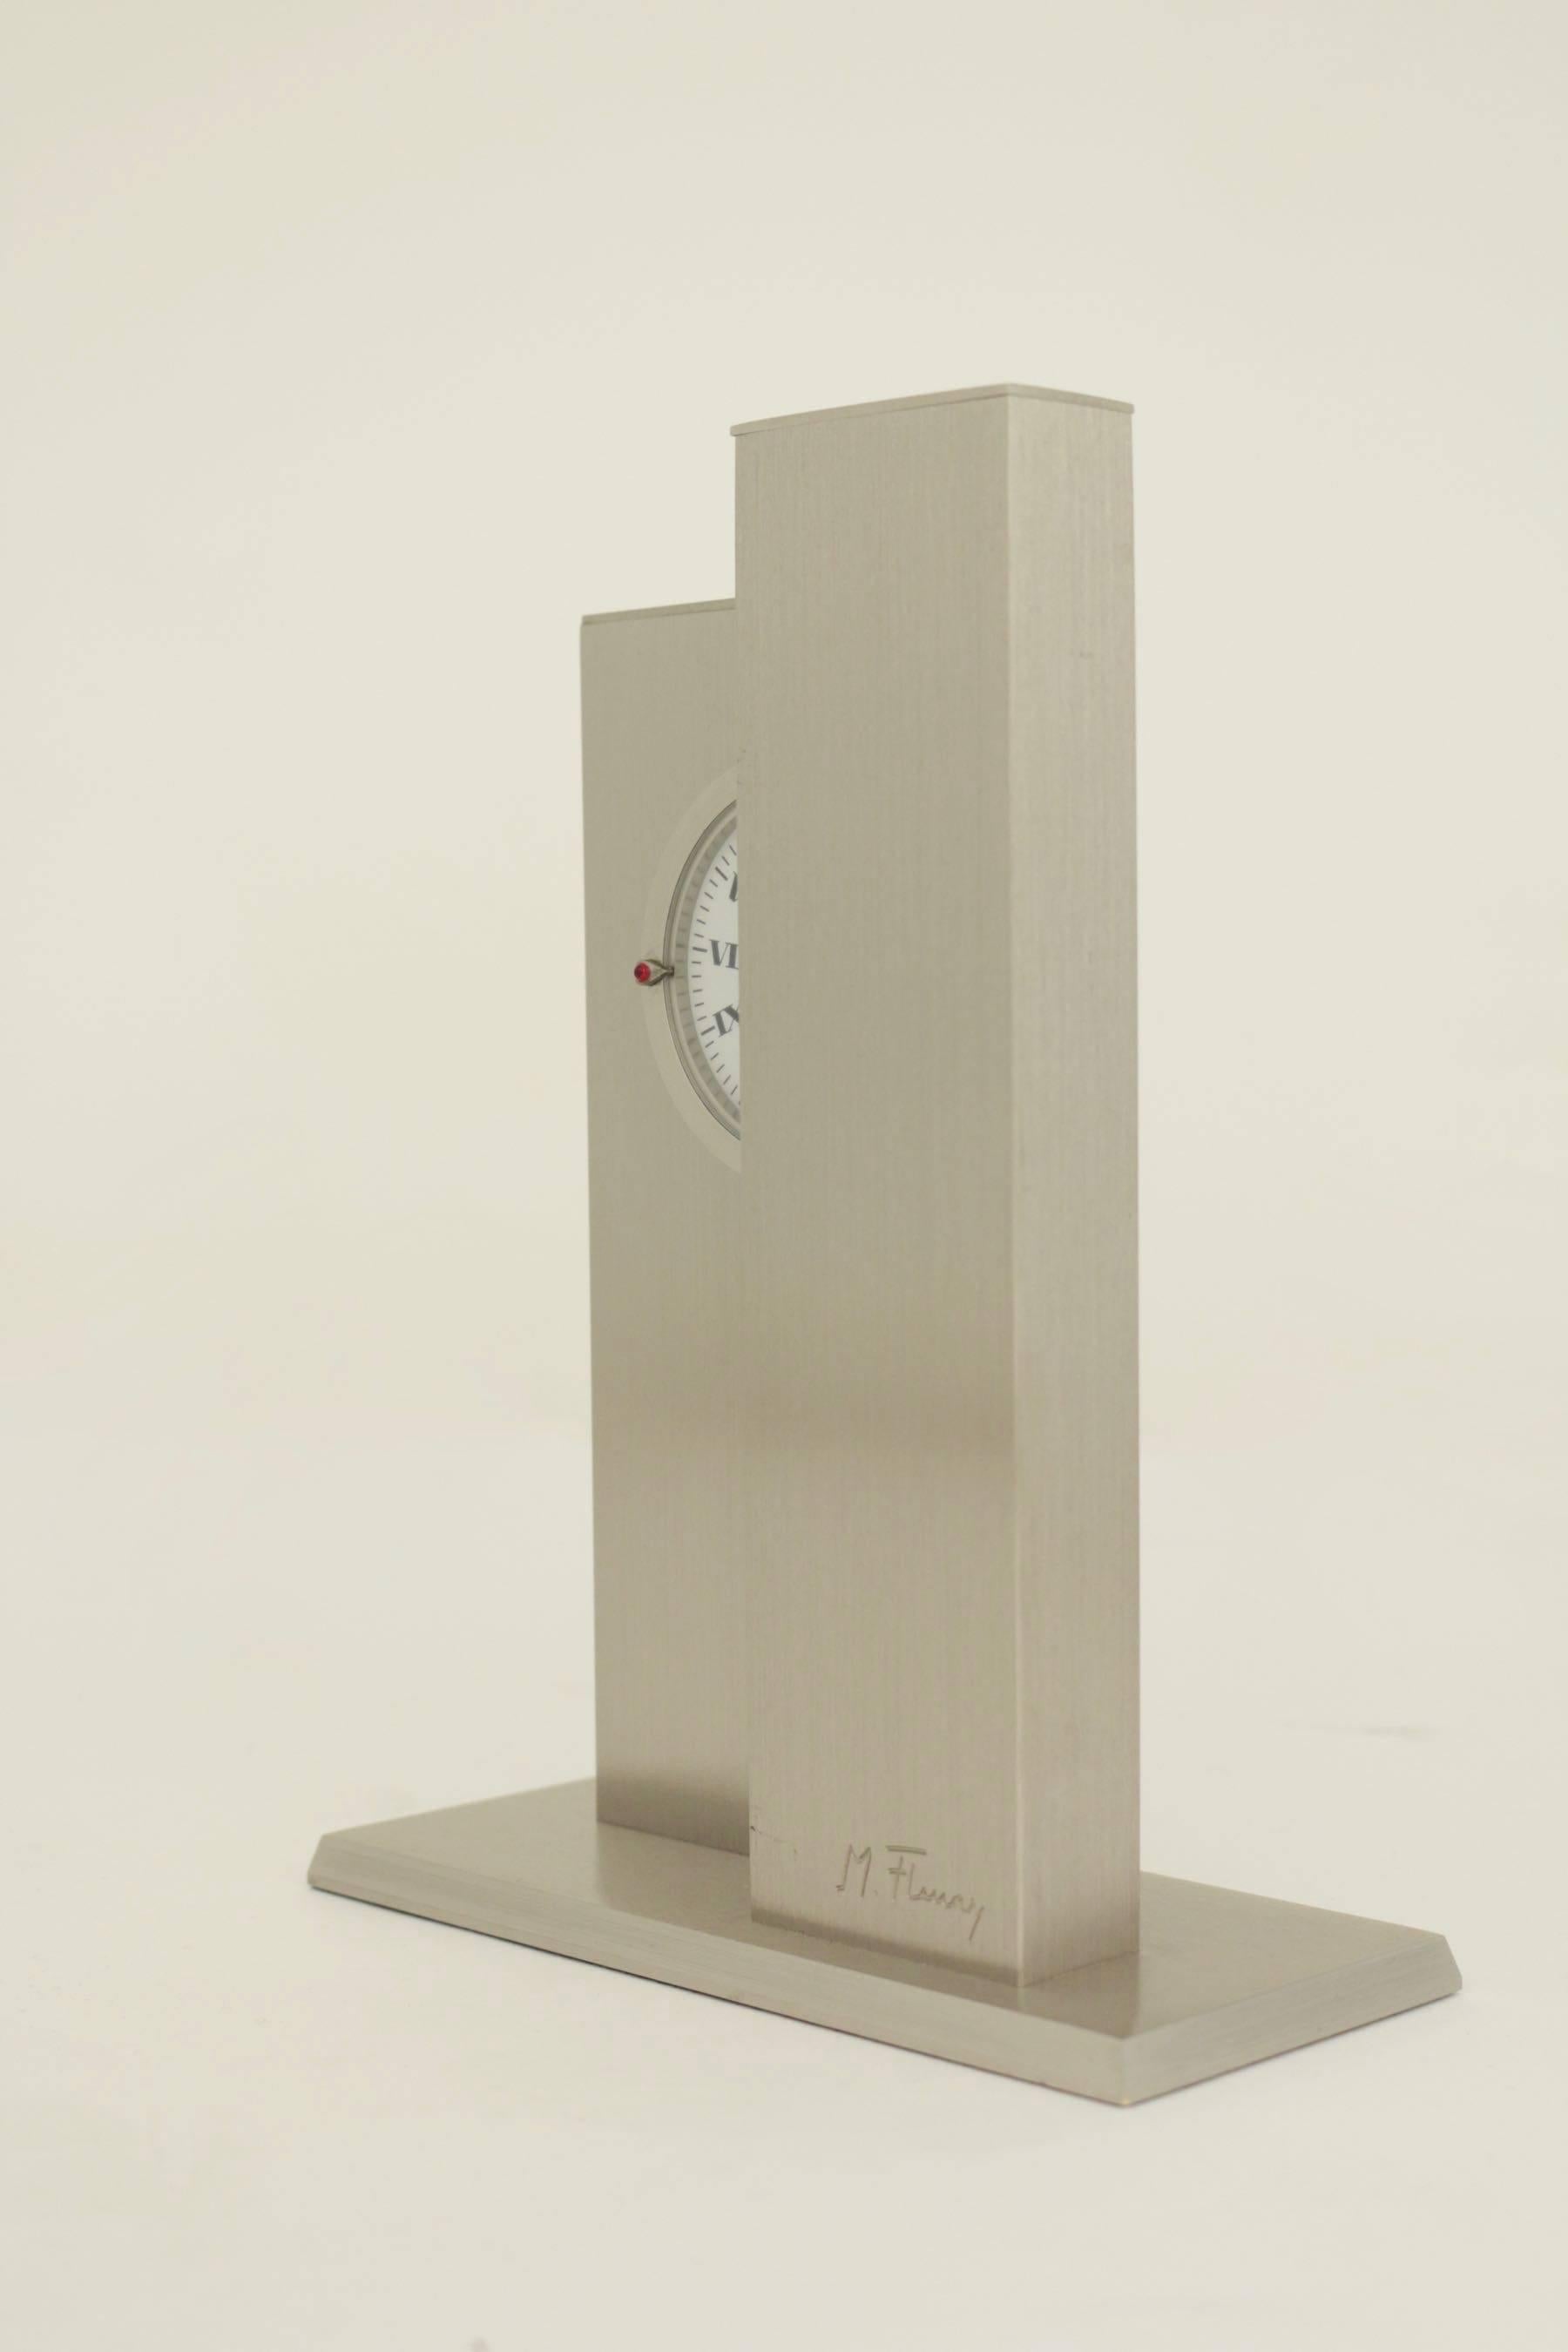 French 1970 Circadian Clock by Michel Fleury